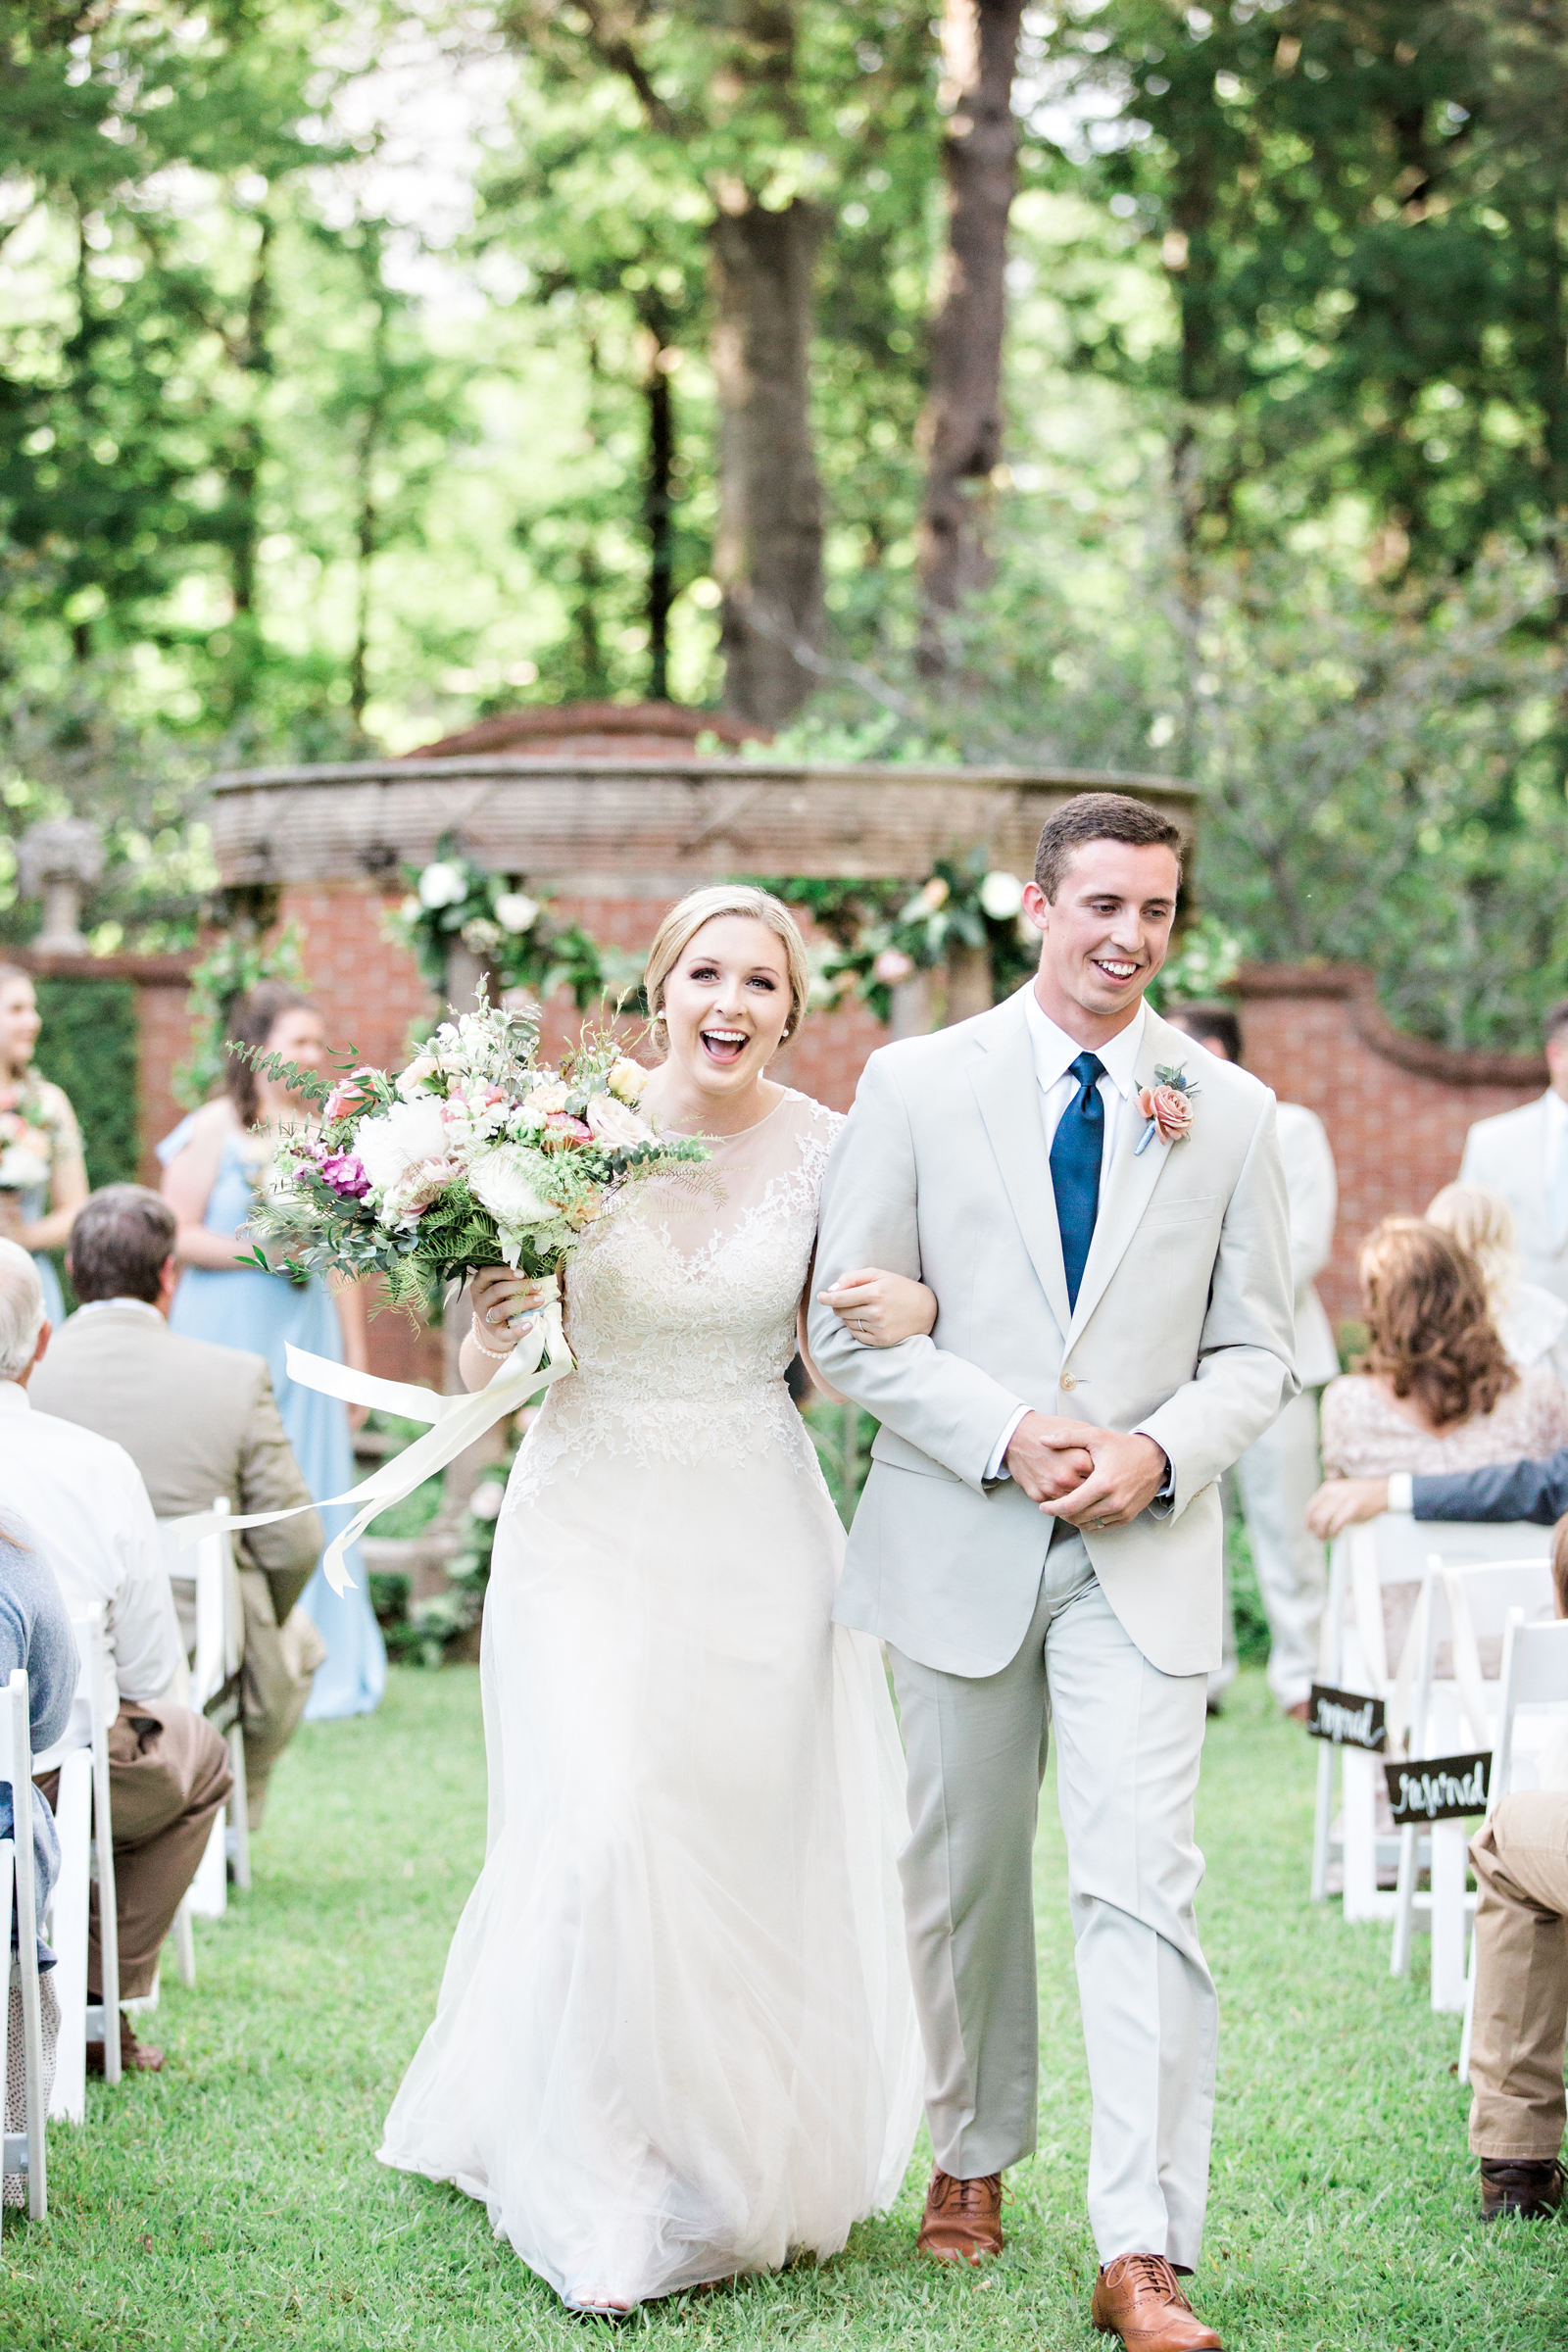 Matty-Drollette-Photography-Alabama-Weddings-Sara and Logan-139.jpg